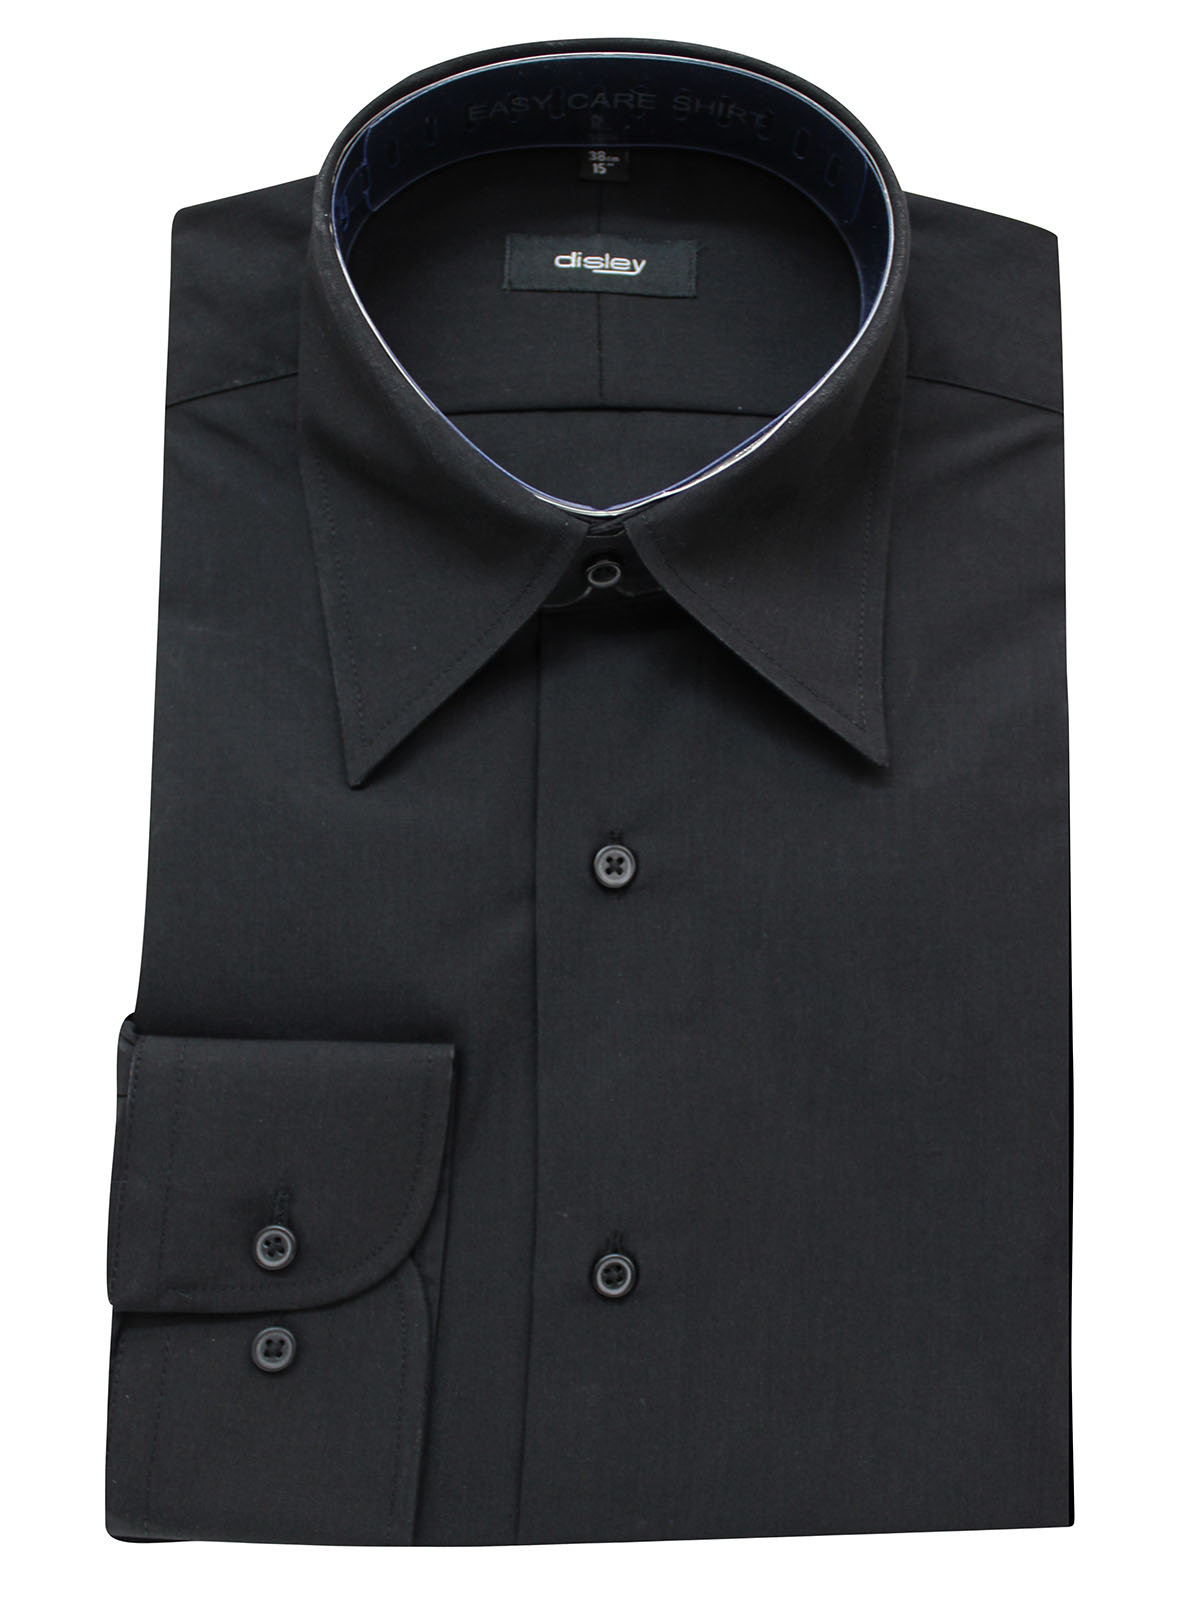 Disley - - Disley BLACK Long Sleeve Semi-Tailored TORR Shirt - Collar ...